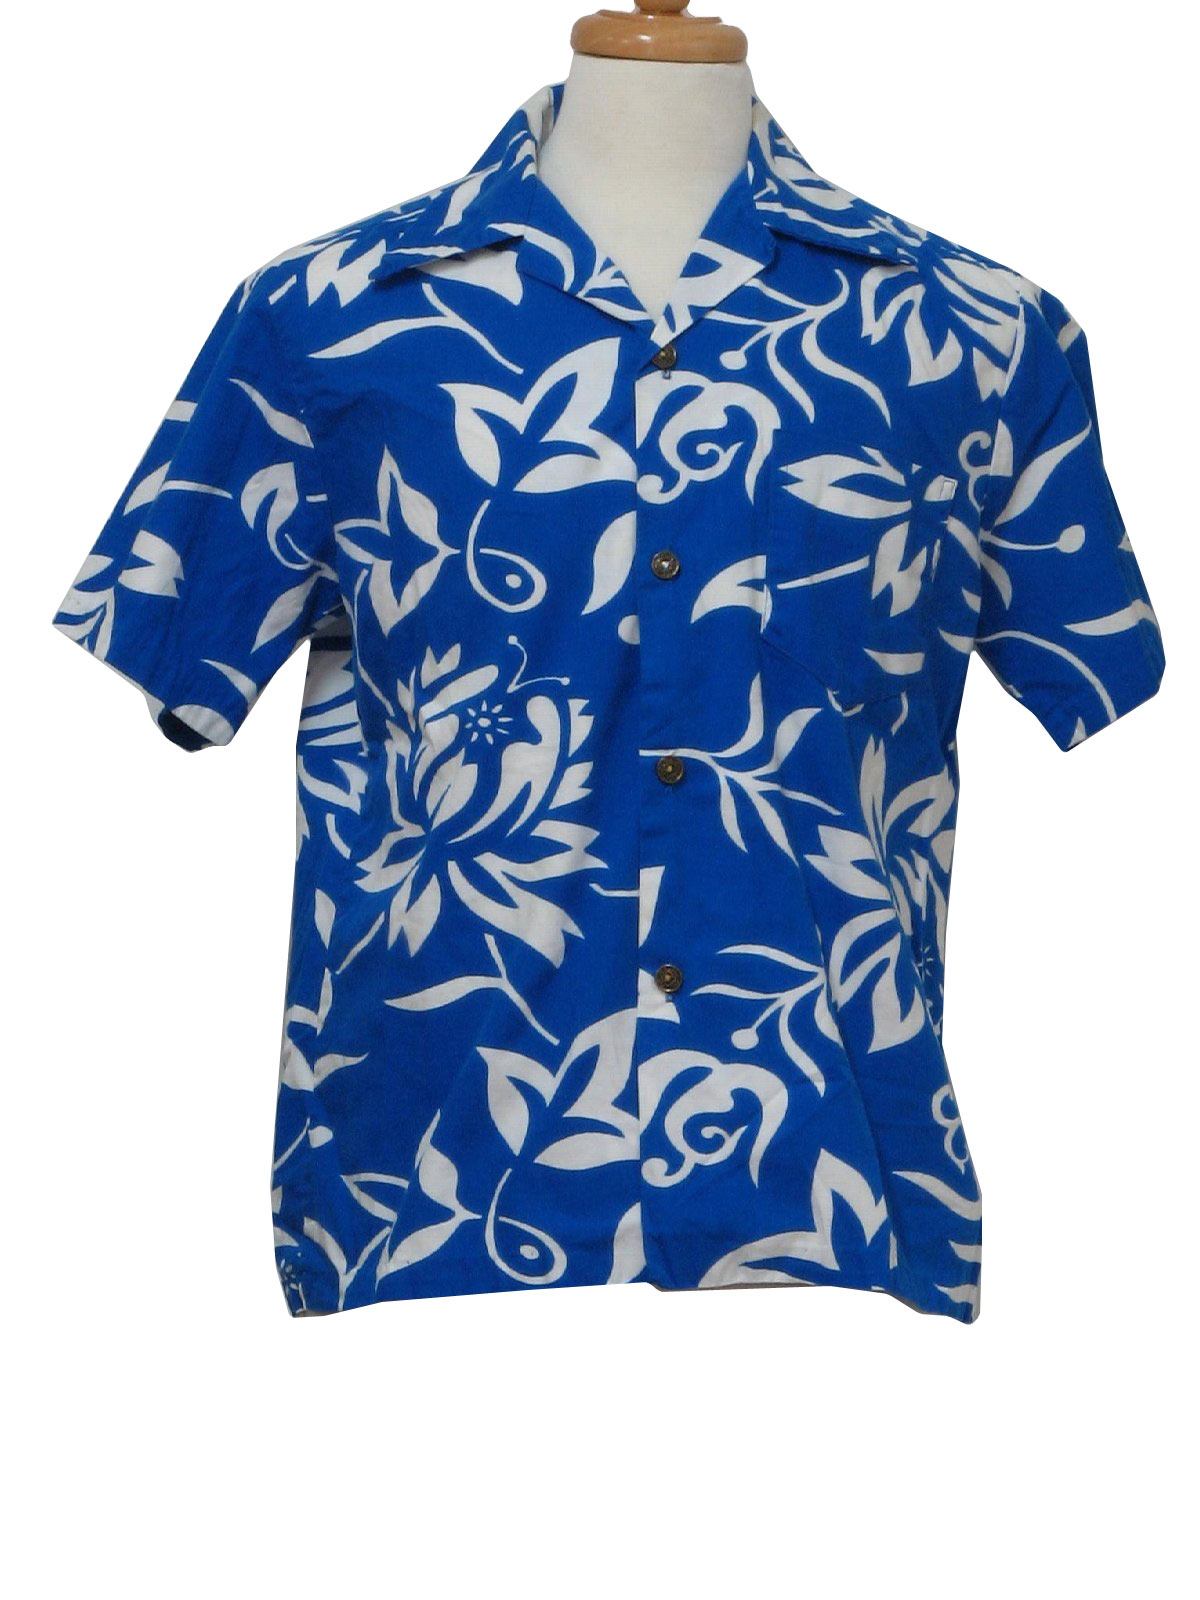 Retro 70's Hawaiian Shirt: 70s -made in Hawaii- Mens bright blue and ...